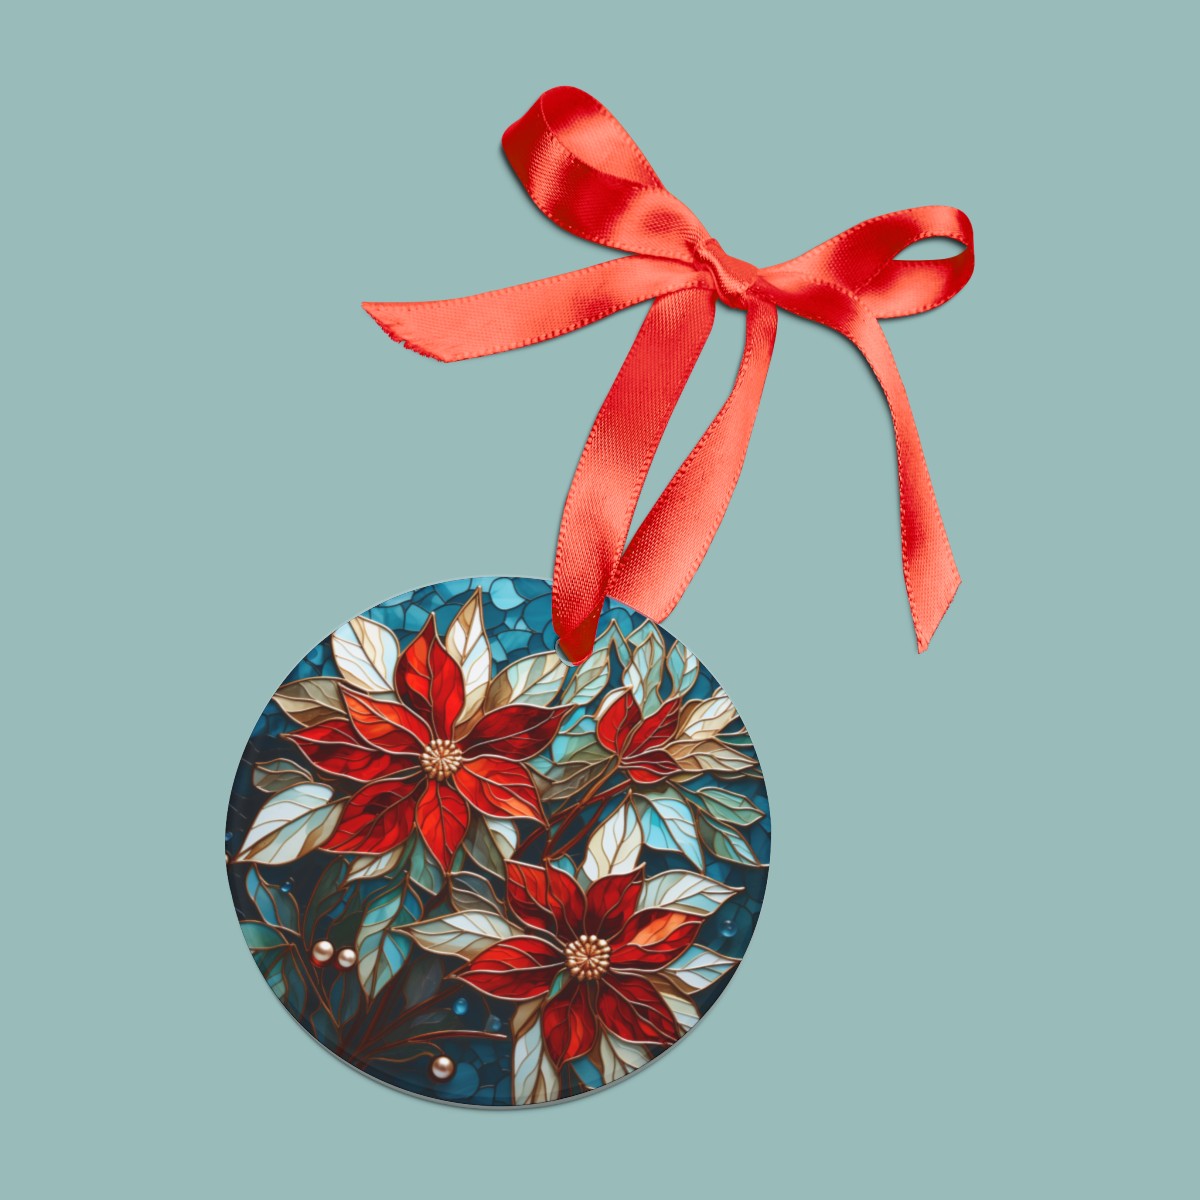 Elegant Poinsettias Christmas Ornament product thumbnail image